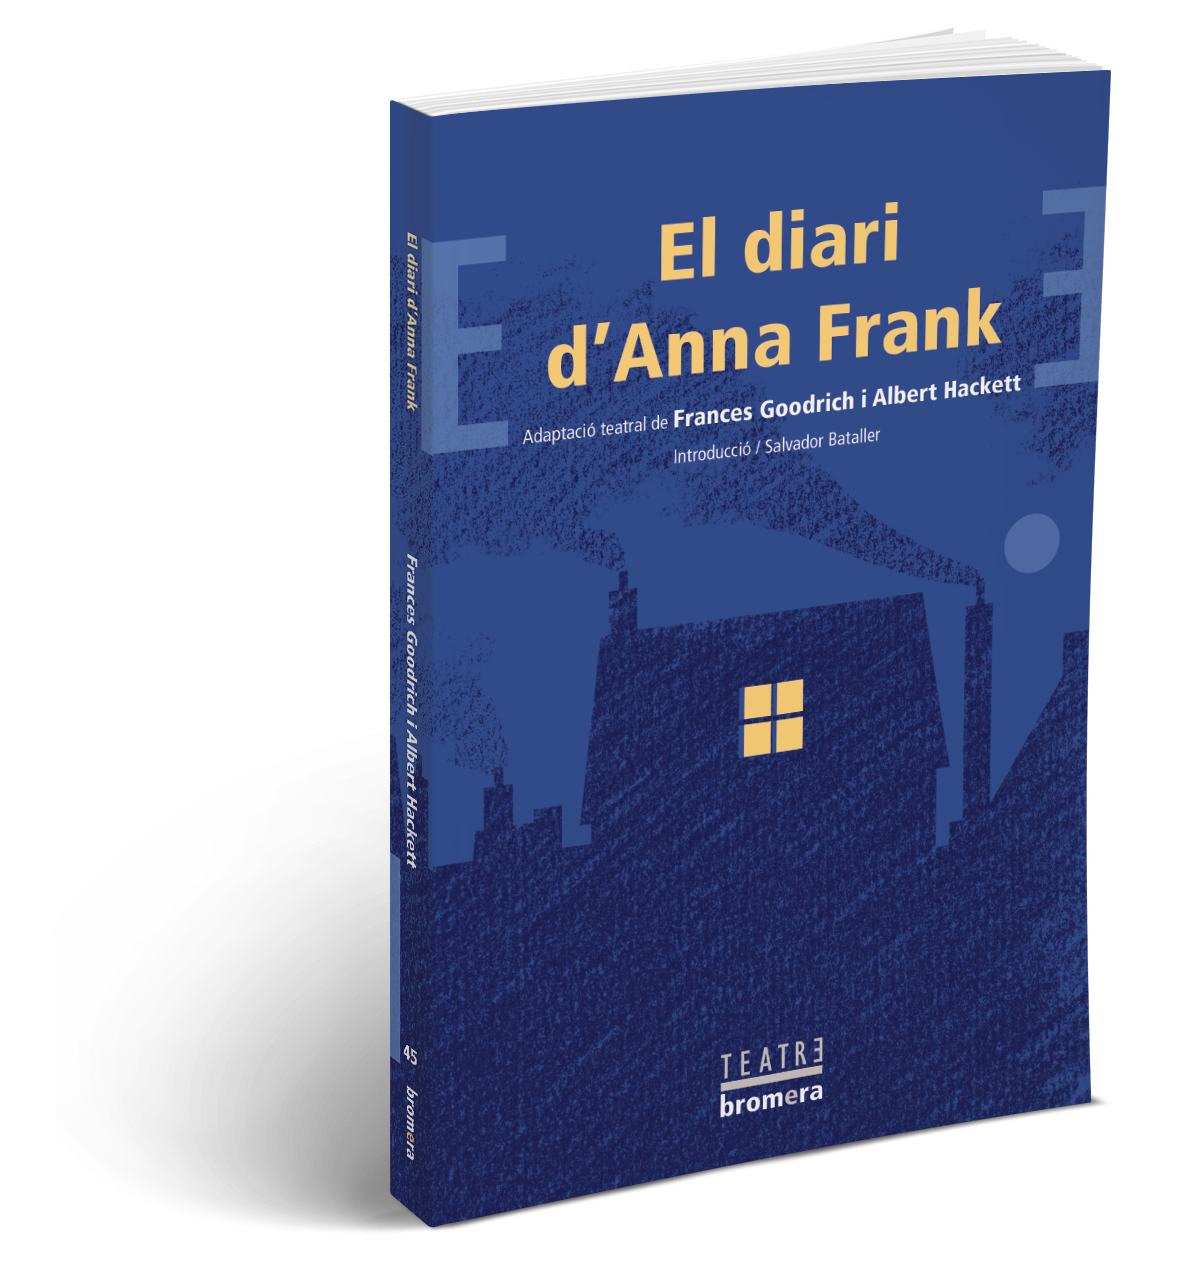 <p><strong>El diari d'Anna Frank</strong></p>